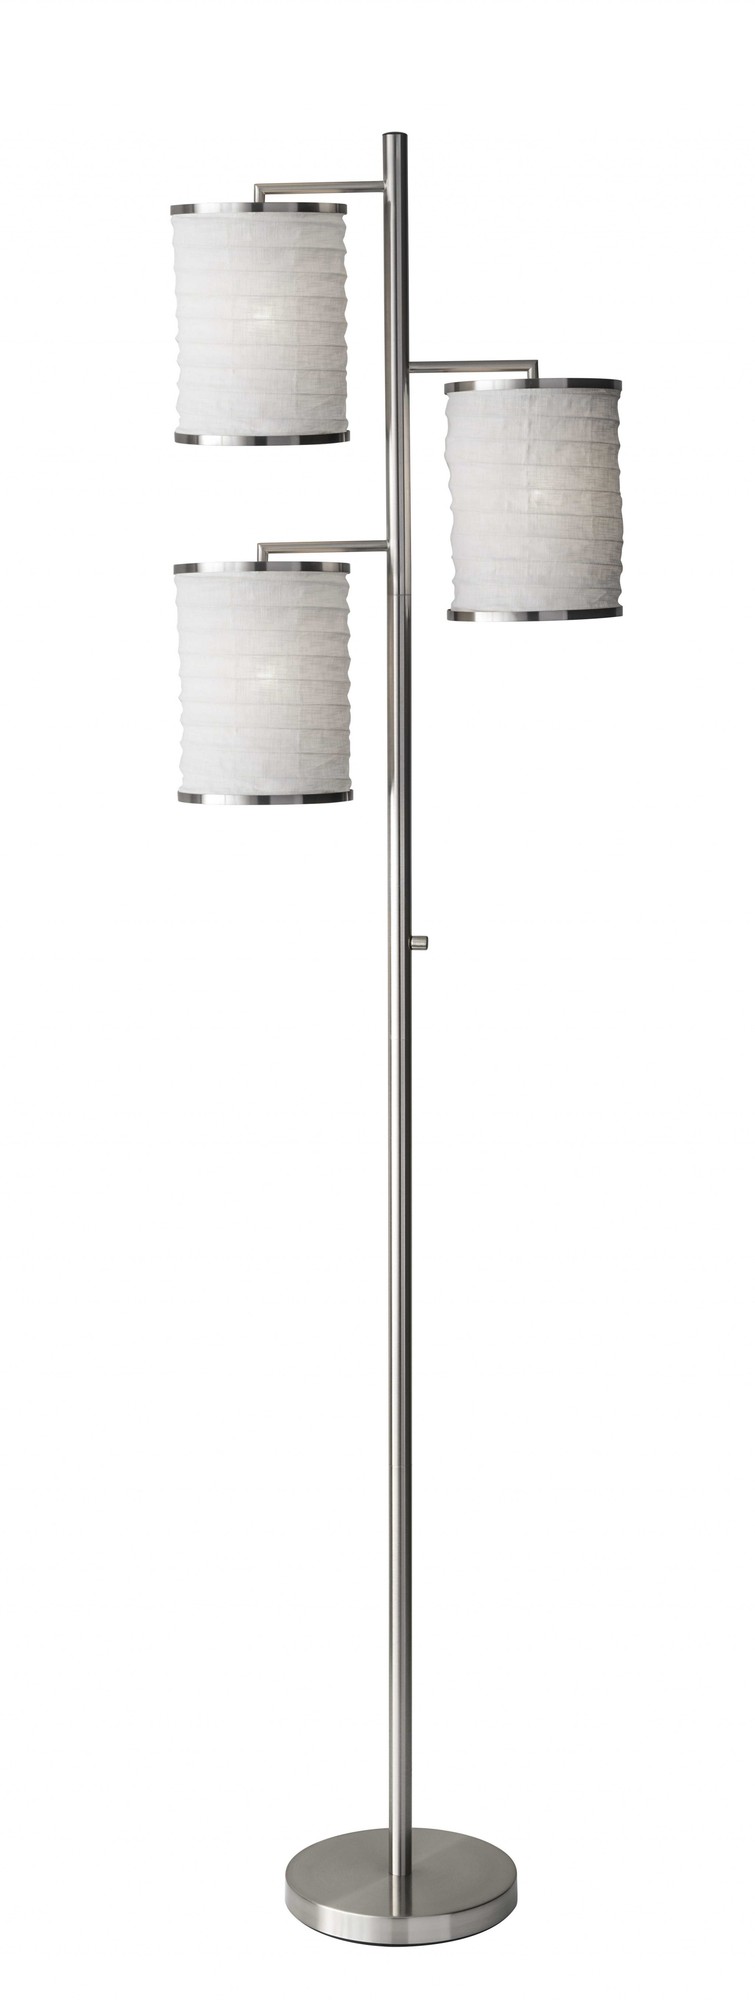 17.5" X 10" X 74" Brushed steel Metal Tree Lamp